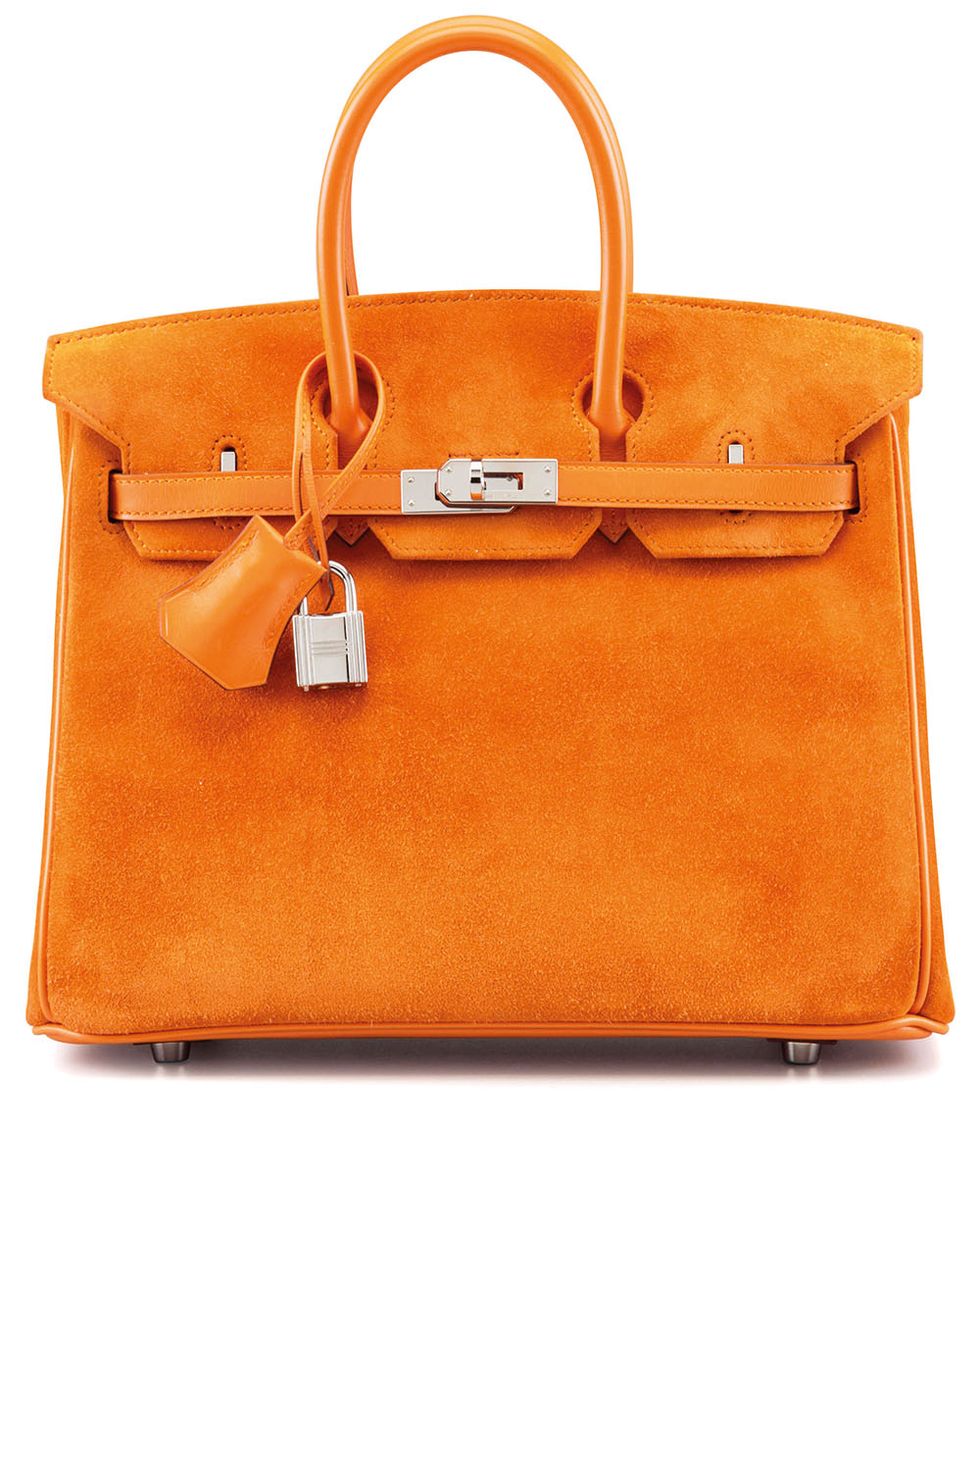 Handbag, Bag, Leather, Fashion accessory, Orange, Birkin bag, Yellow, Tan, Brown, Shoulder bag, 